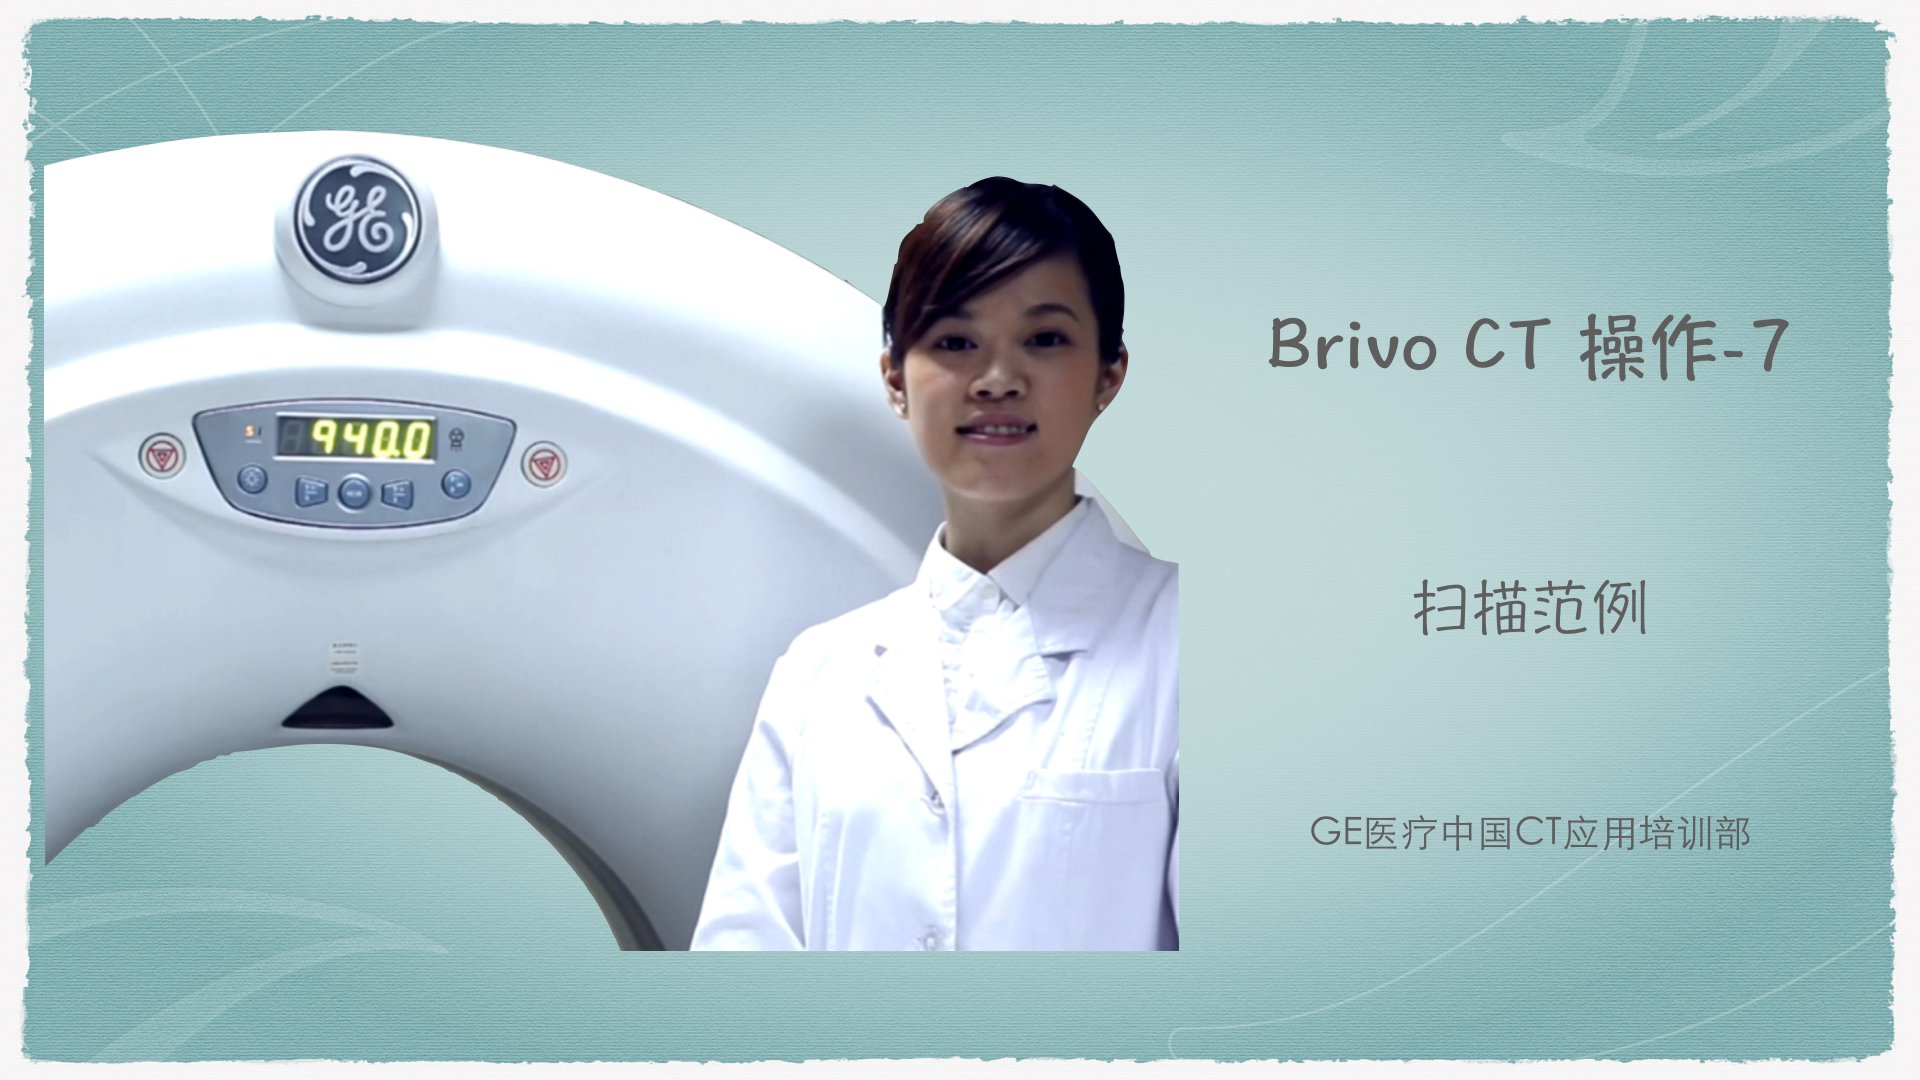 Brivo CT-7扫描范例